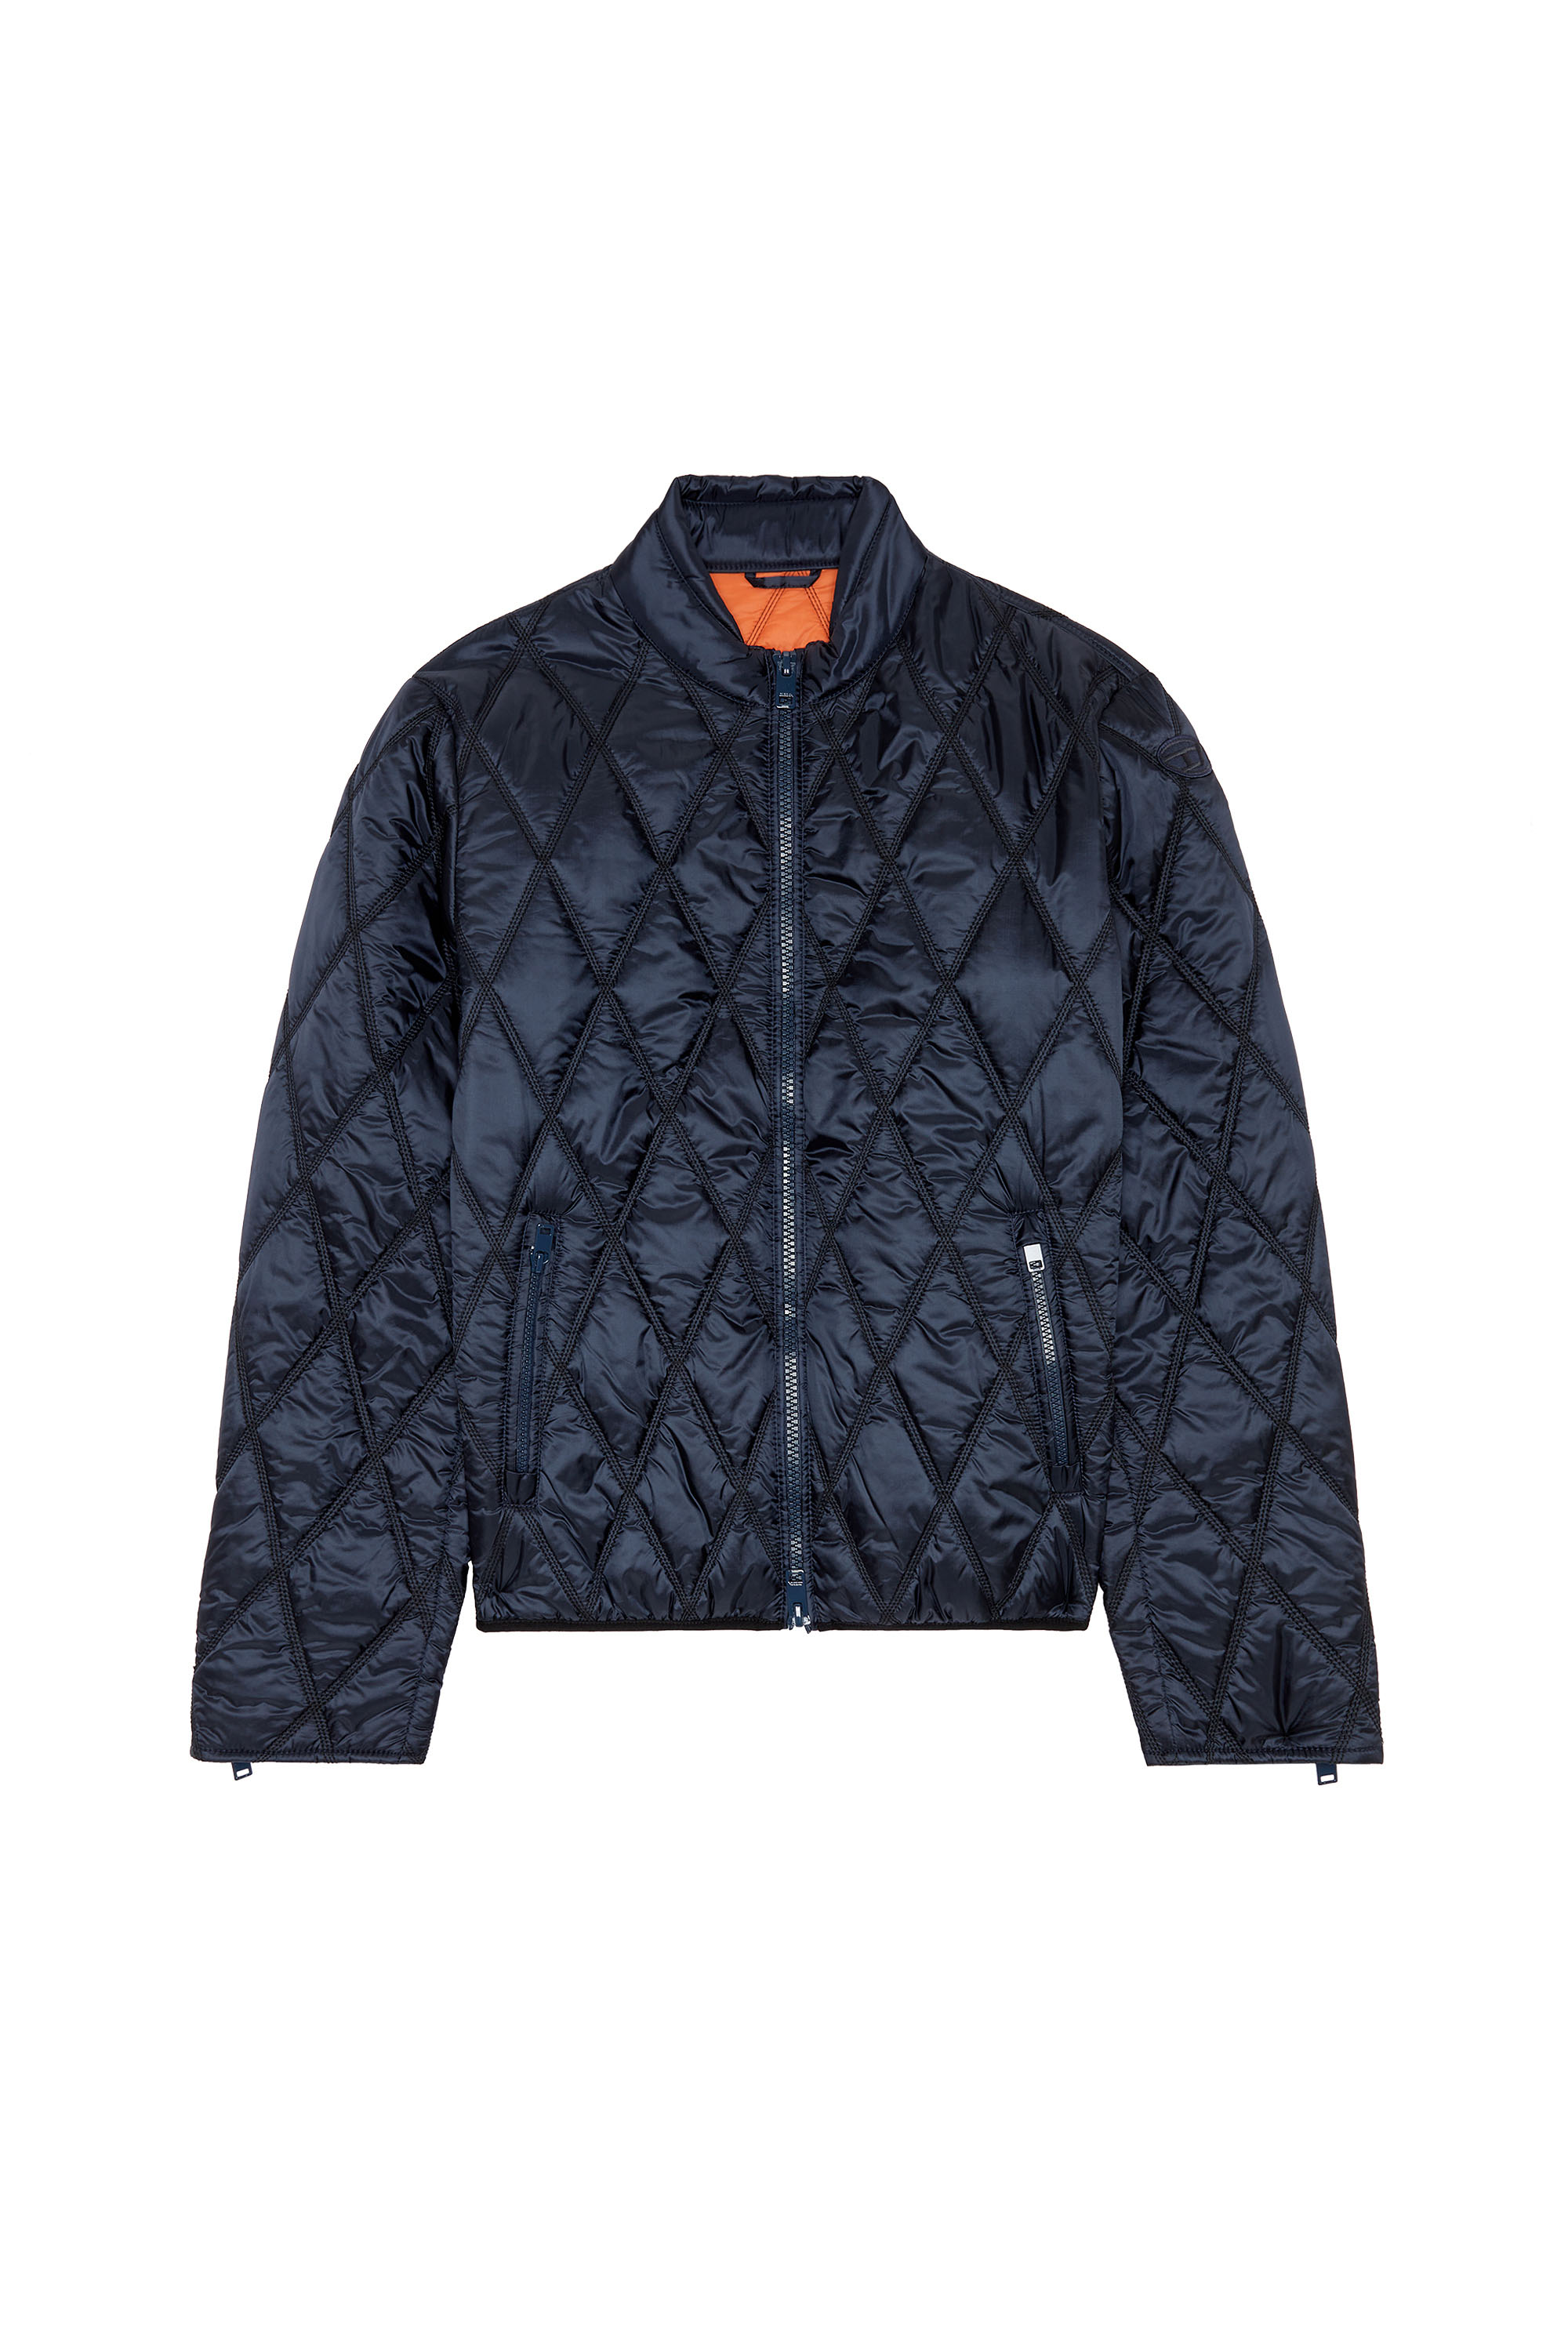 Diesel - J-NIEL, Man Mock-neck jacket in quilted nylon in Blue - Image 3